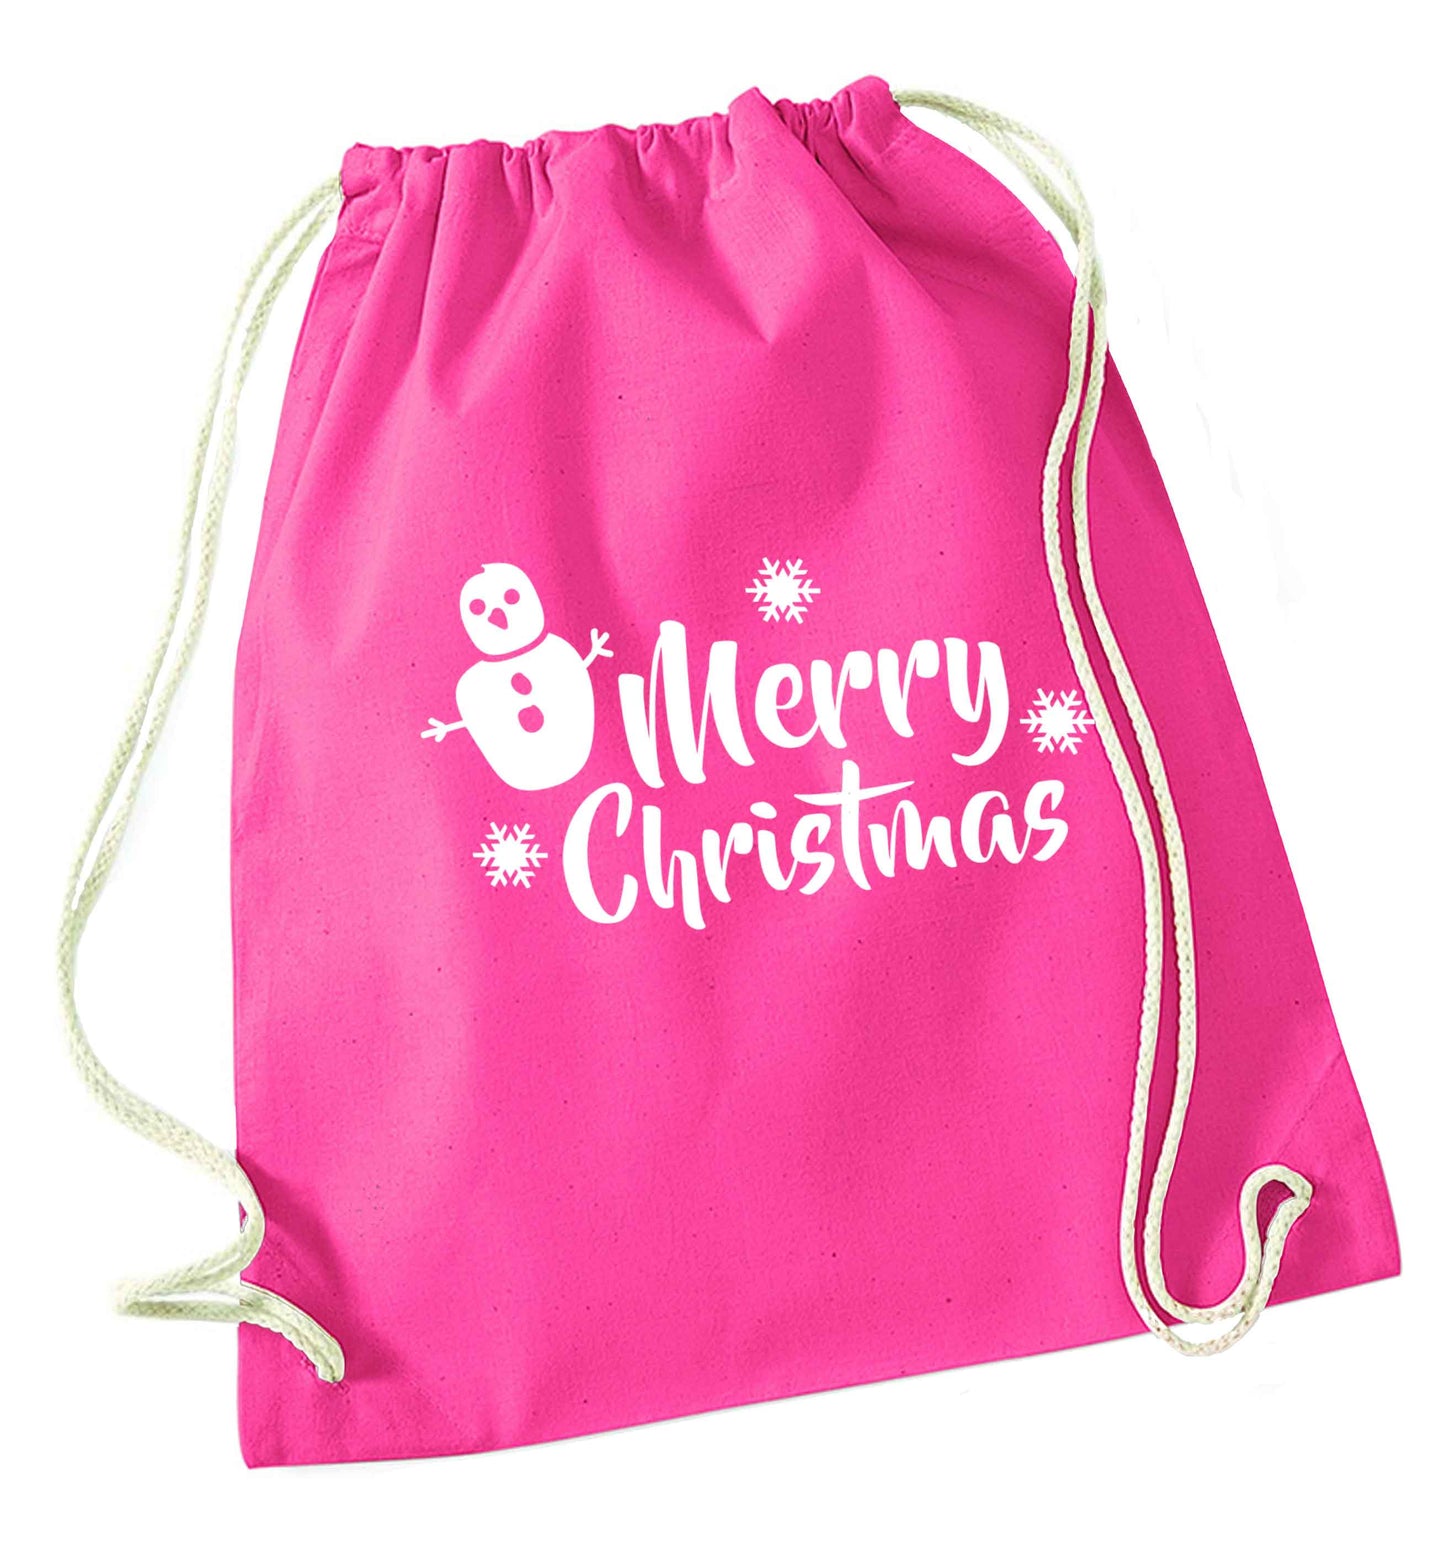 Merry Christmas - snowman pink drawstring bag